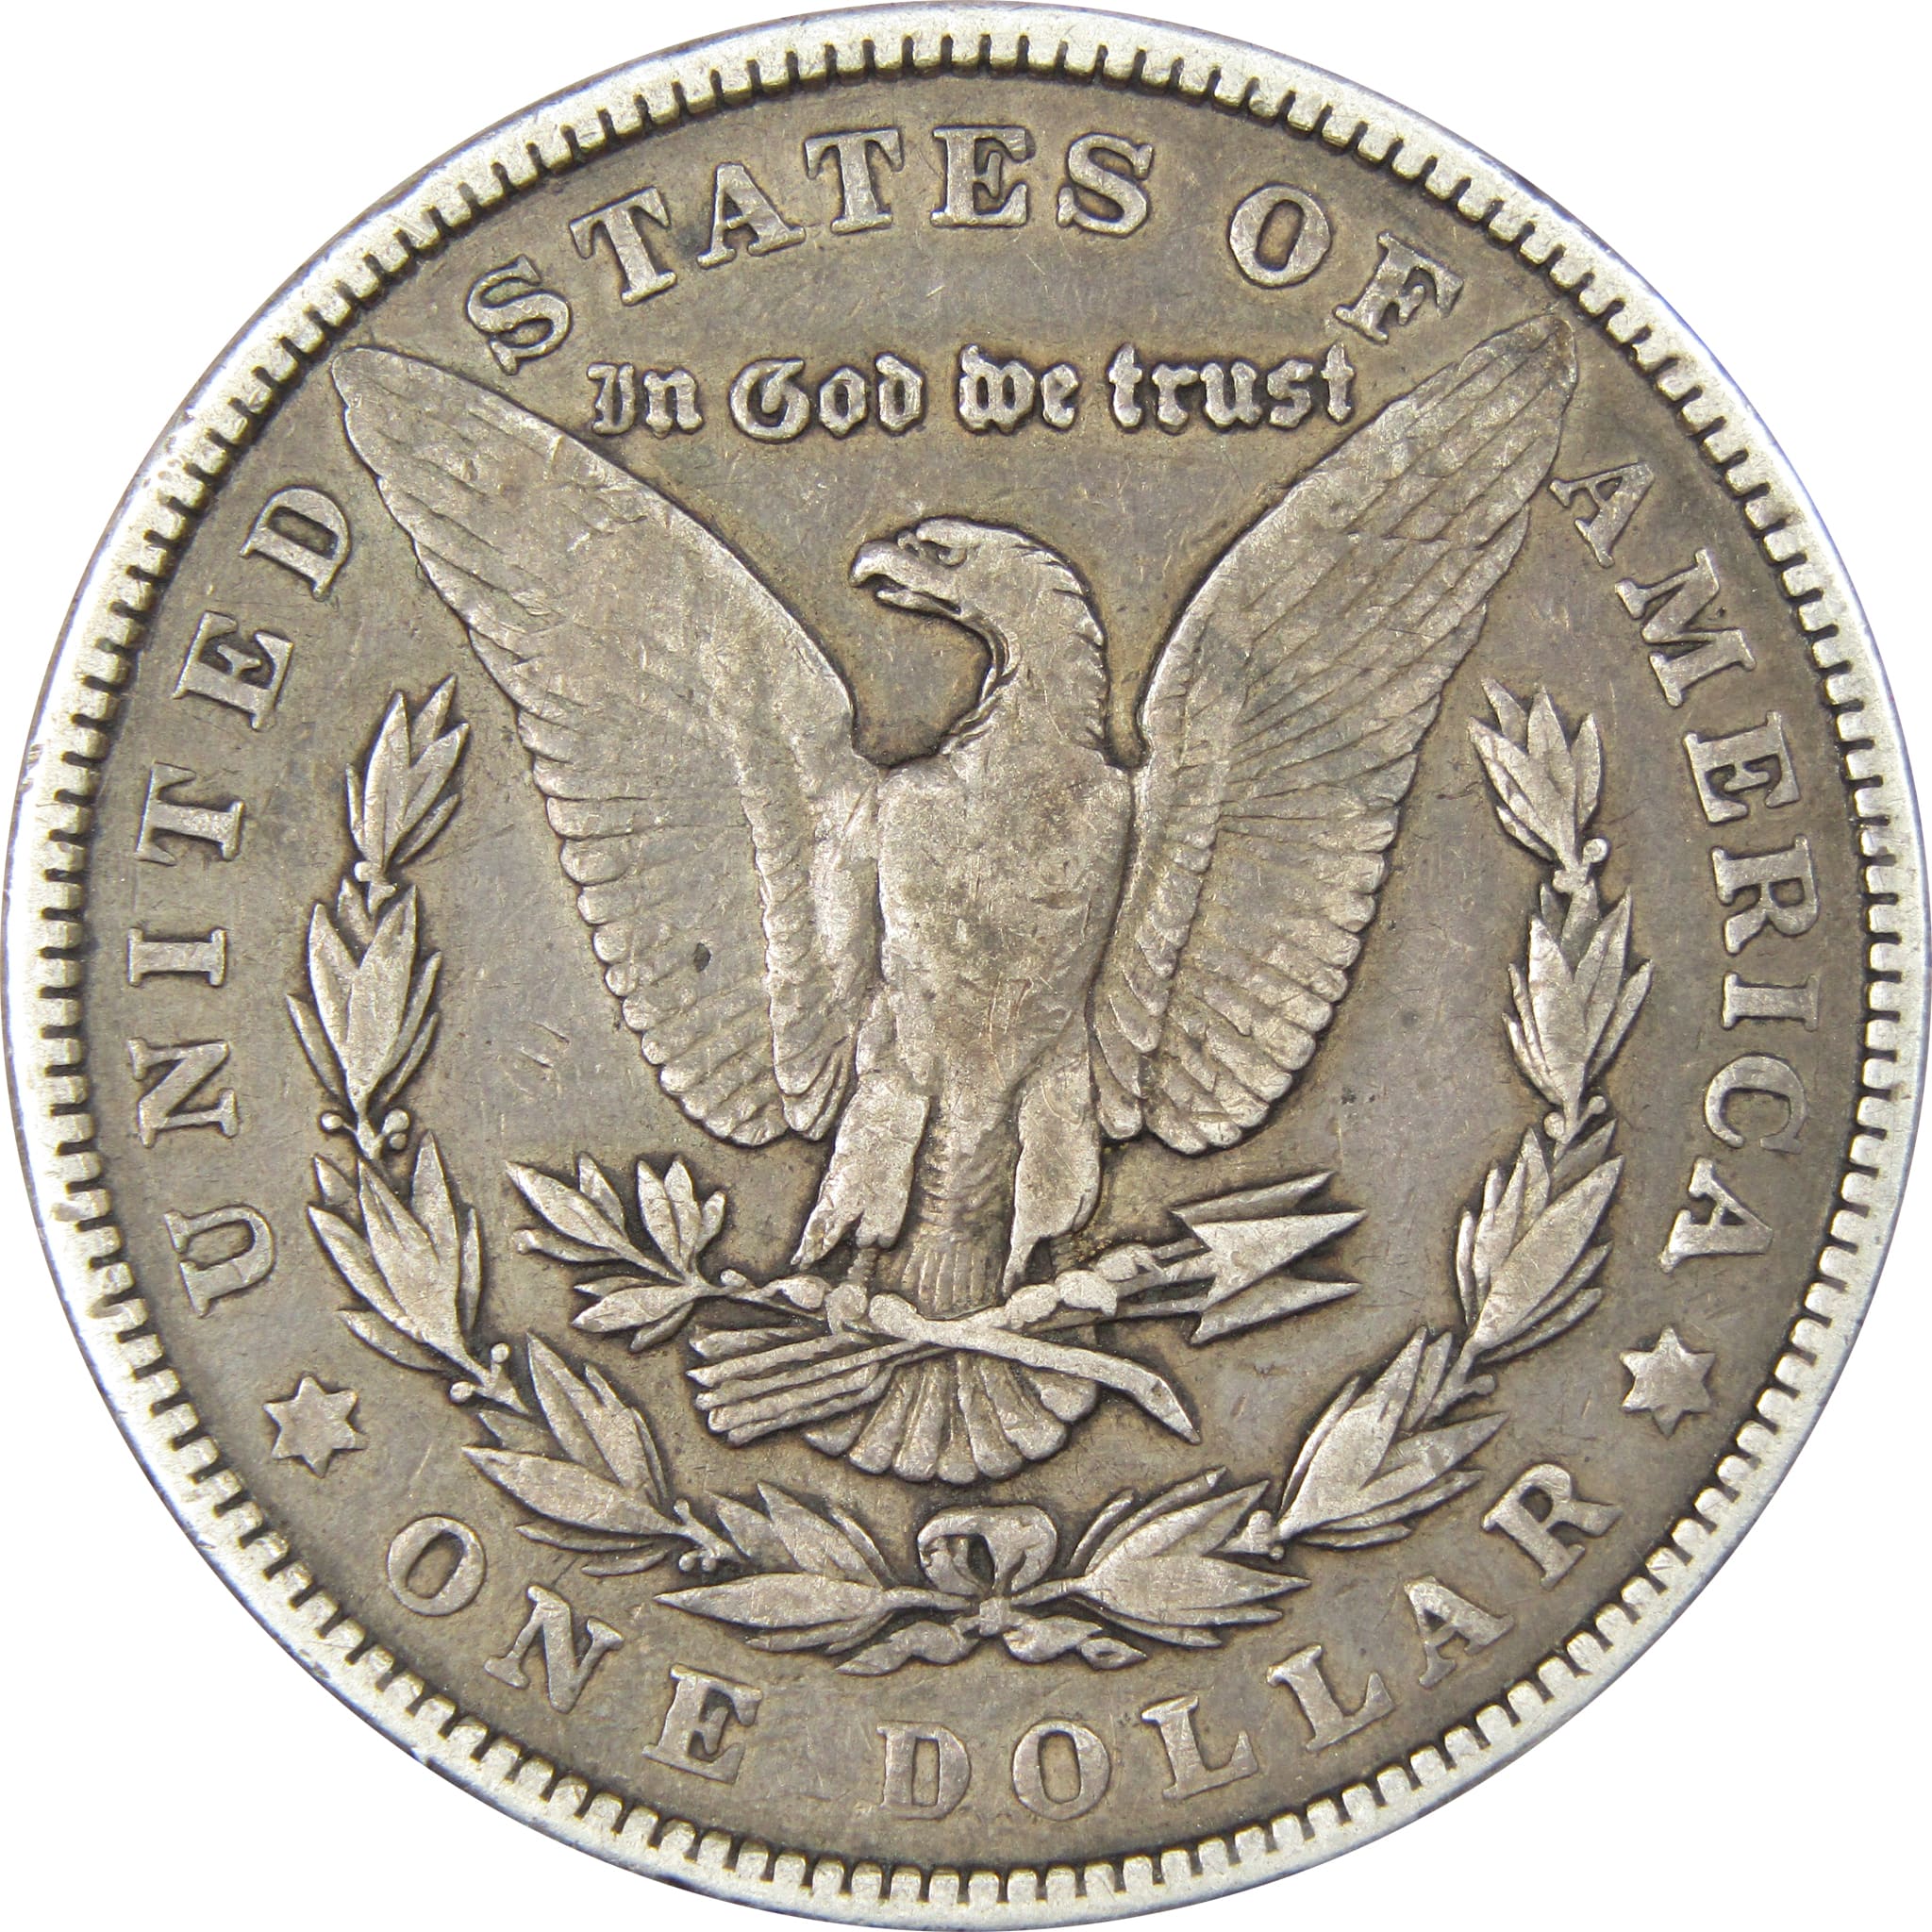 1902 Morgan Dollar F Fine 90% Silver US Coin SKU:IPC7297 - Morgan coin - Morgan silver dollar - Morgan silver dollar for sale - Profile Coins &amp; Collectibles